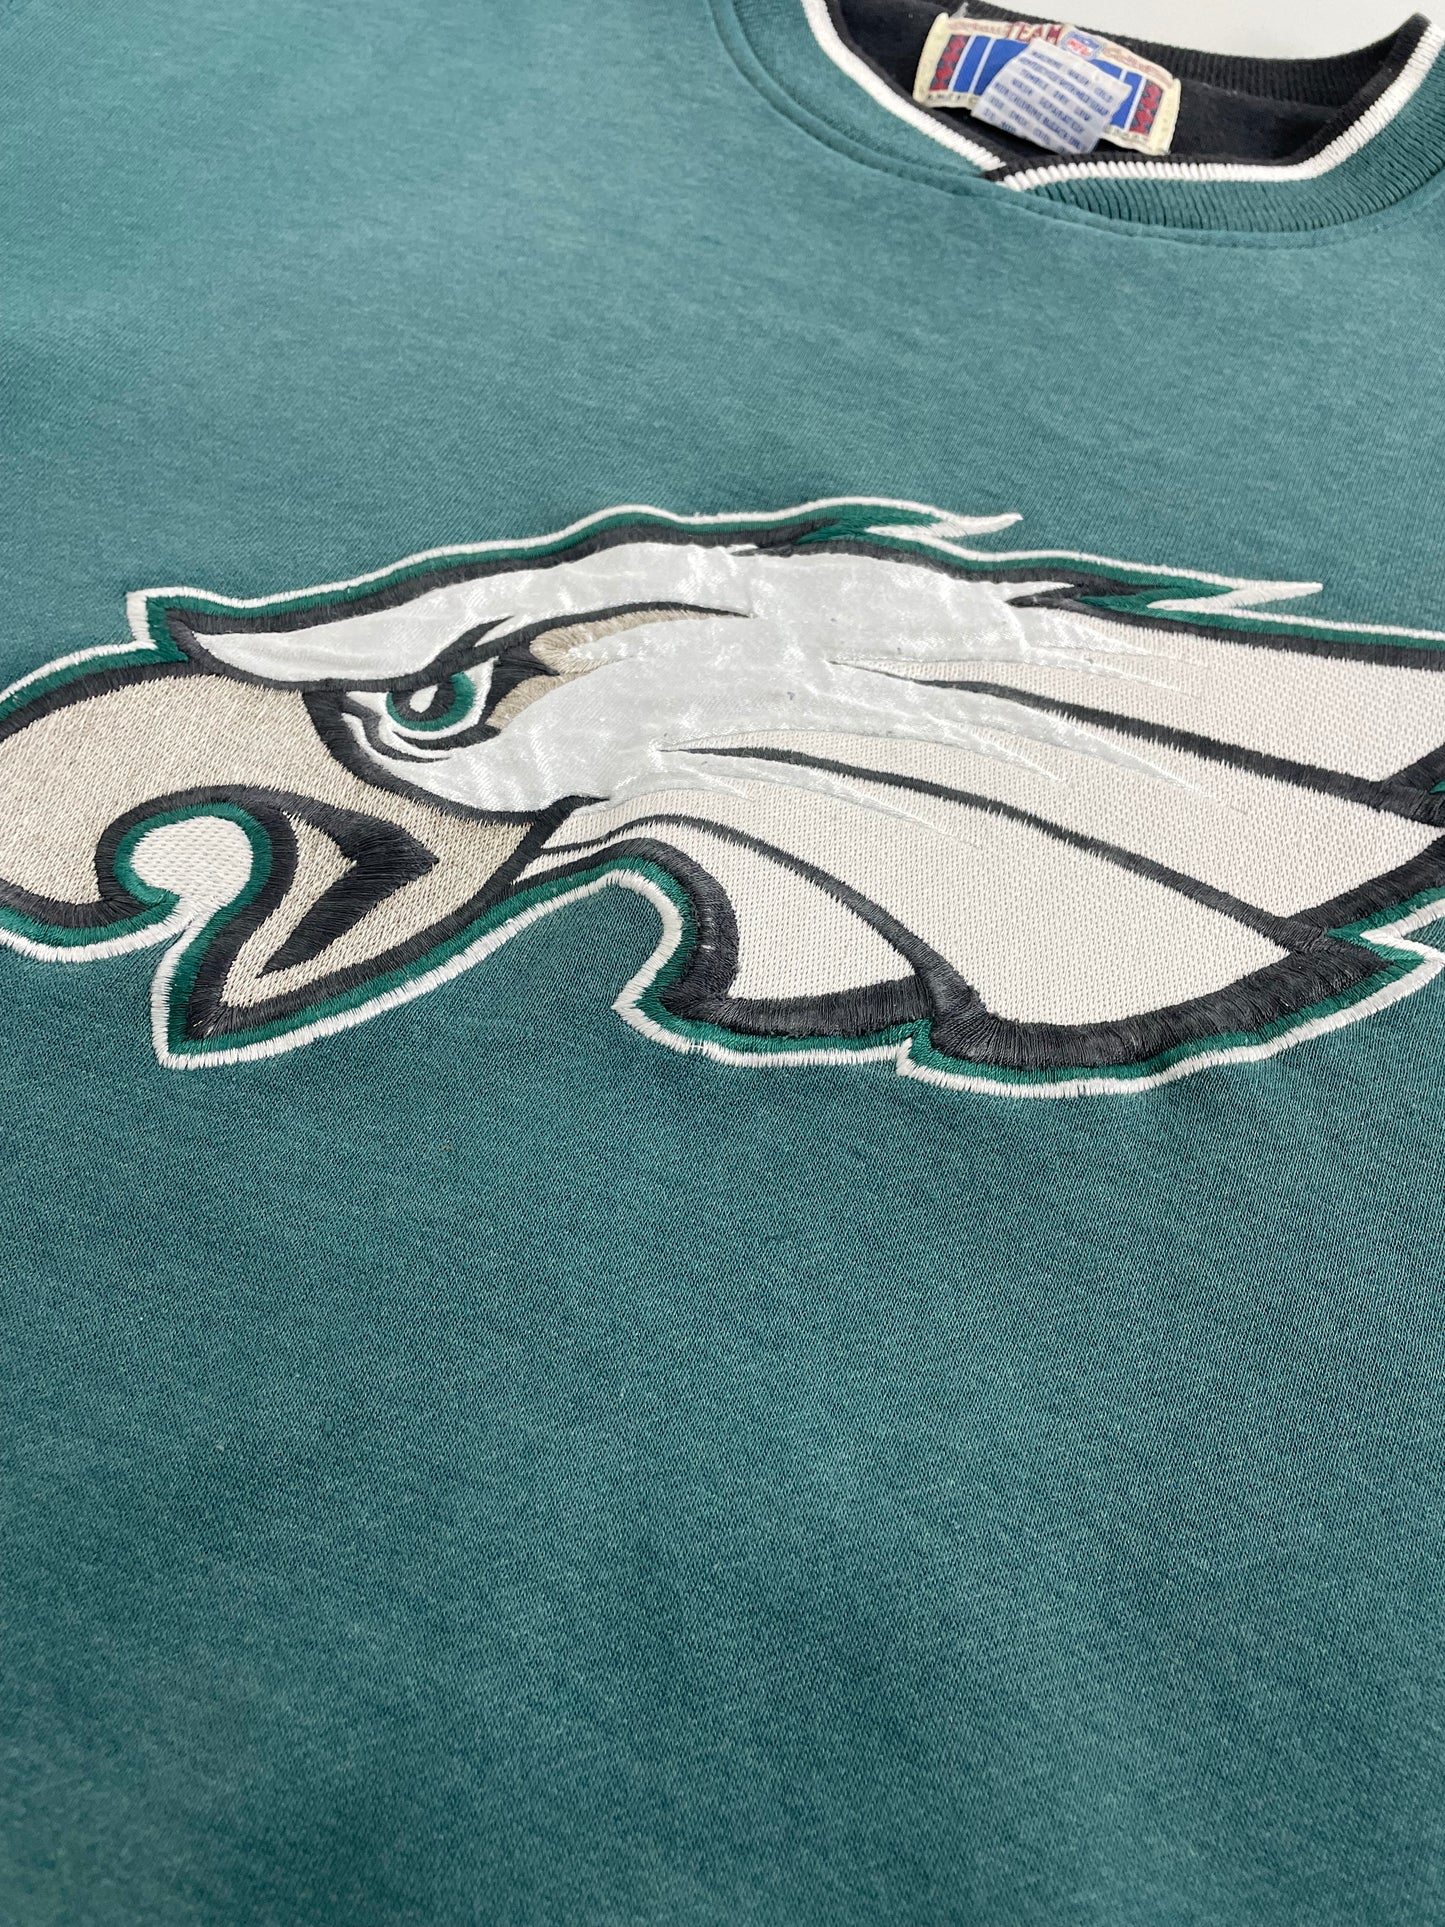 90s Starter Philadelphia Eagles NFL Sweatshirt Green  S/M